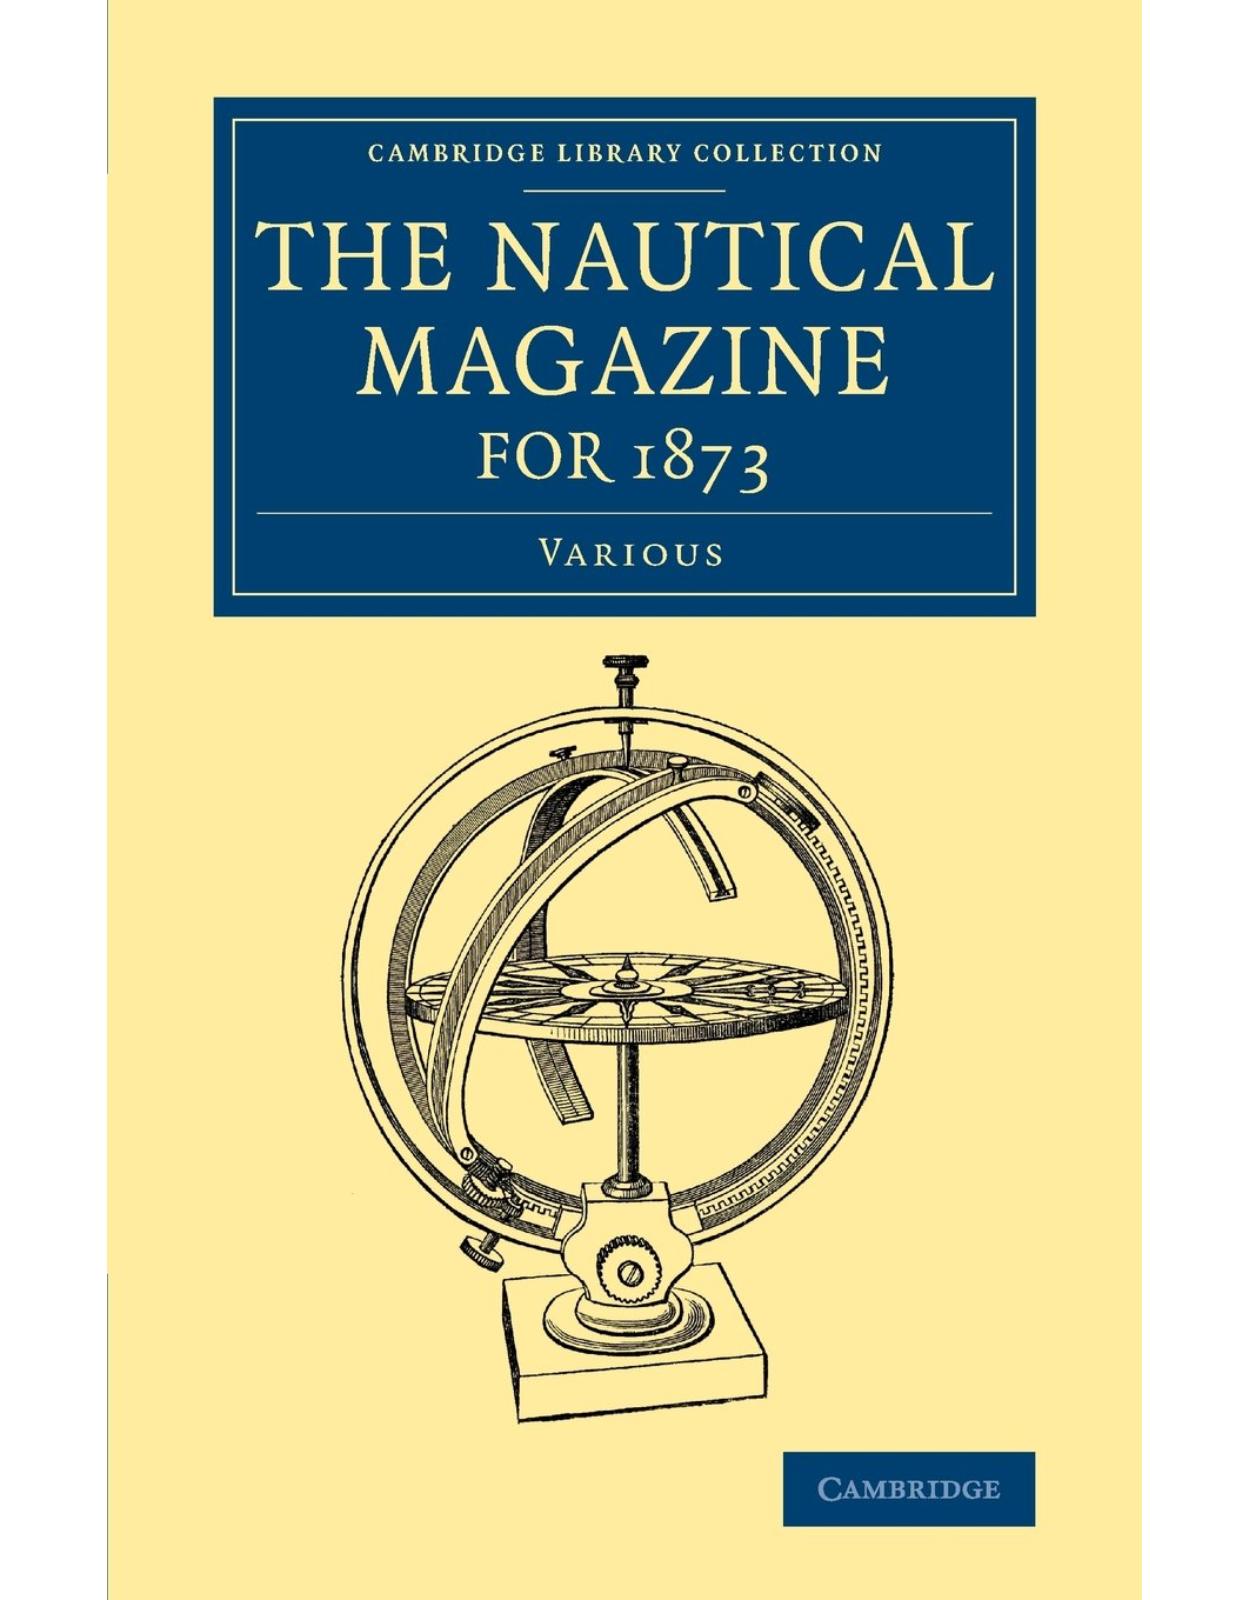 The Nautical Magazine for 1873 (Cambridge Library Collection - The Nautical Magazine)